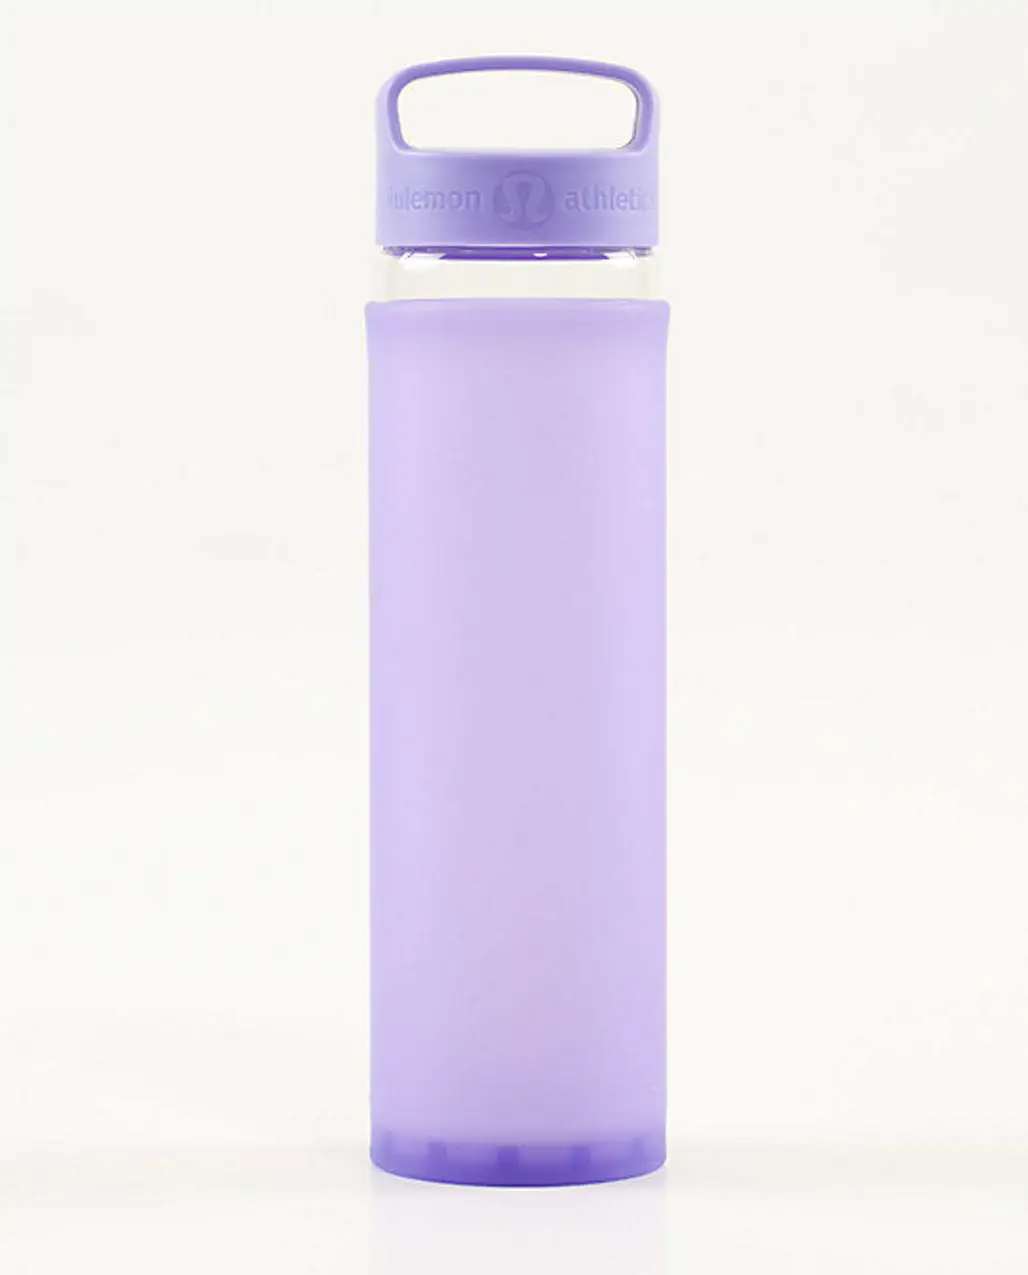 Lululemon Pure Balance Water Bottle